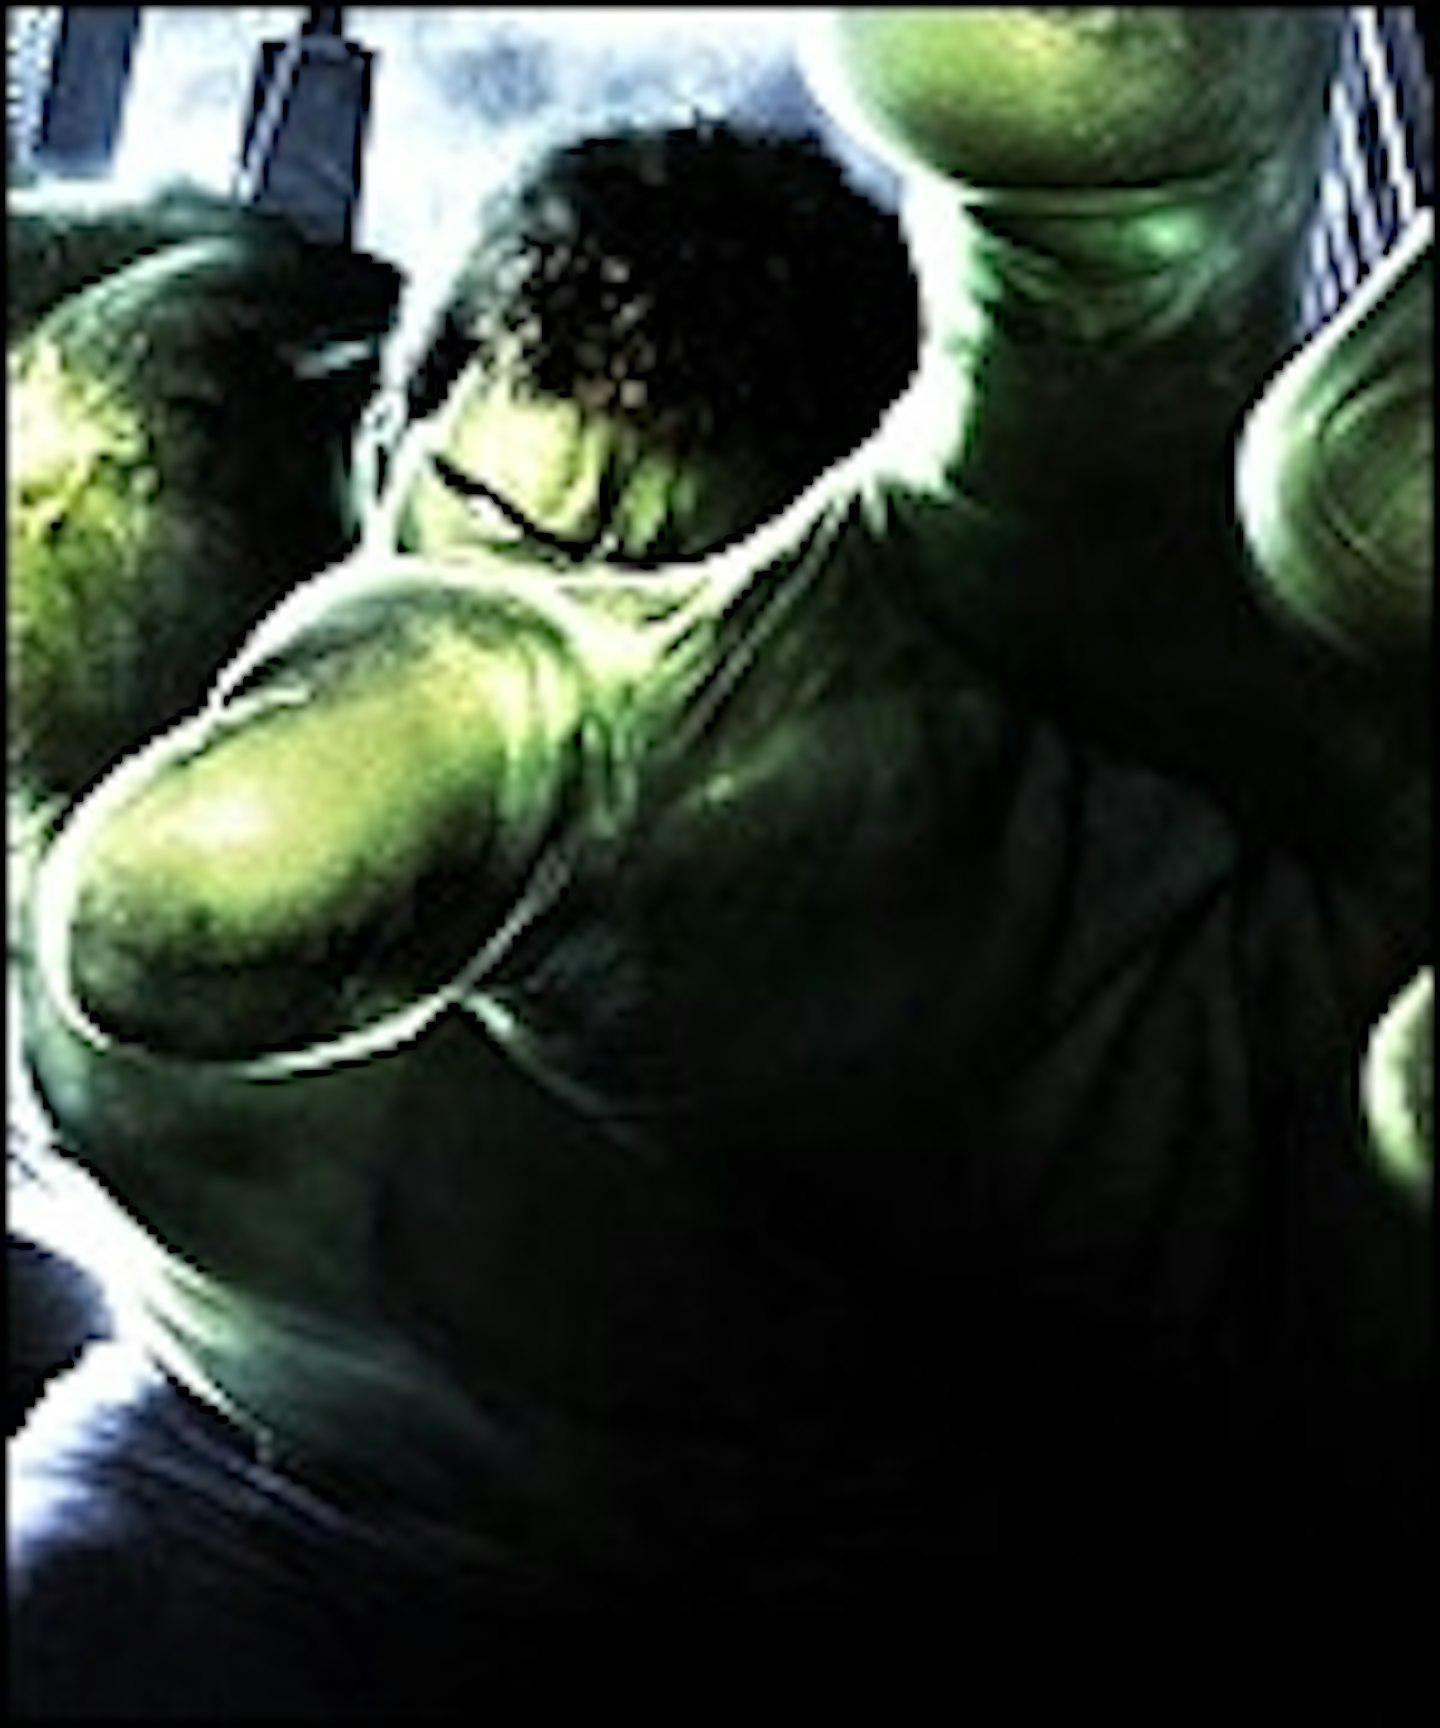 Louis Leterrier Directing Hulk 2